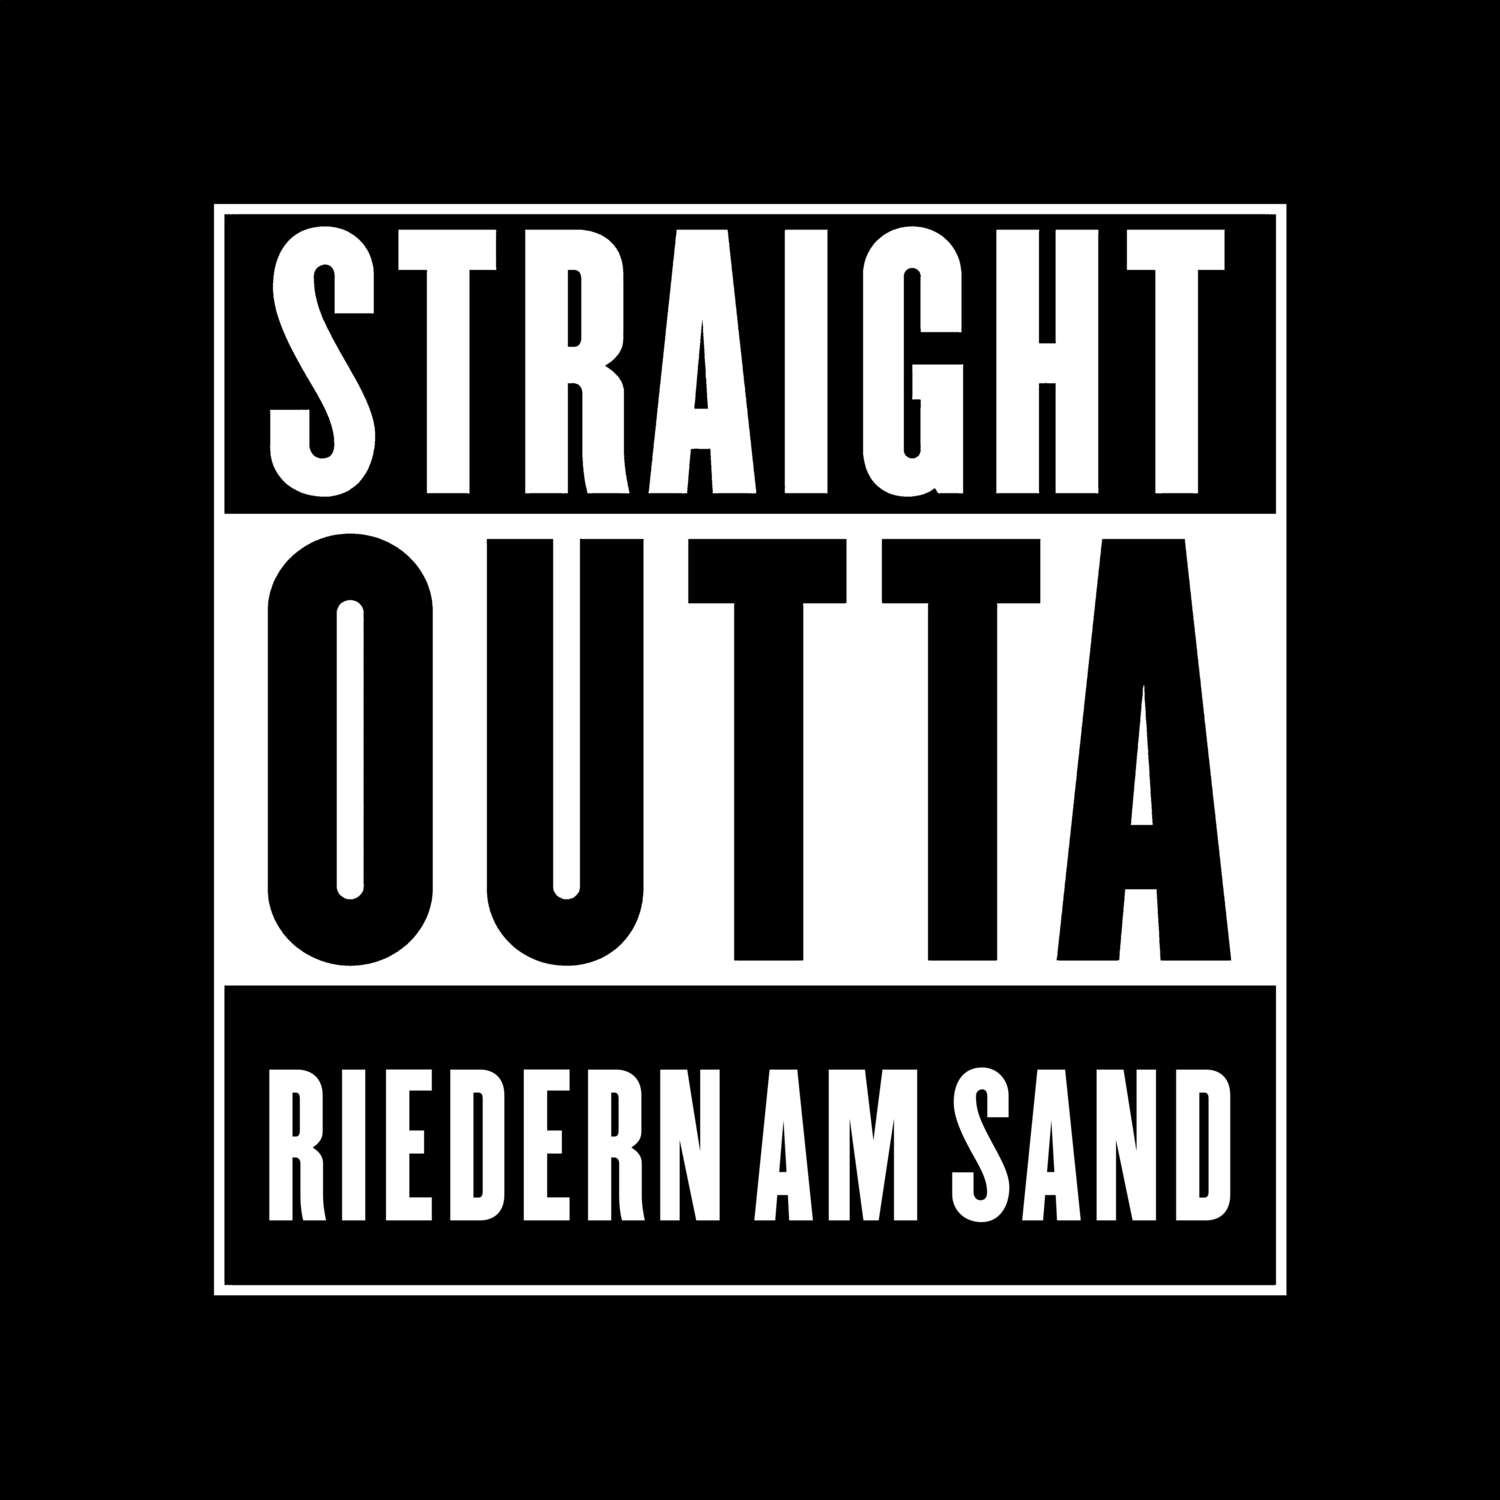 Riedern am Sand T-Shirt »Straight Outta«